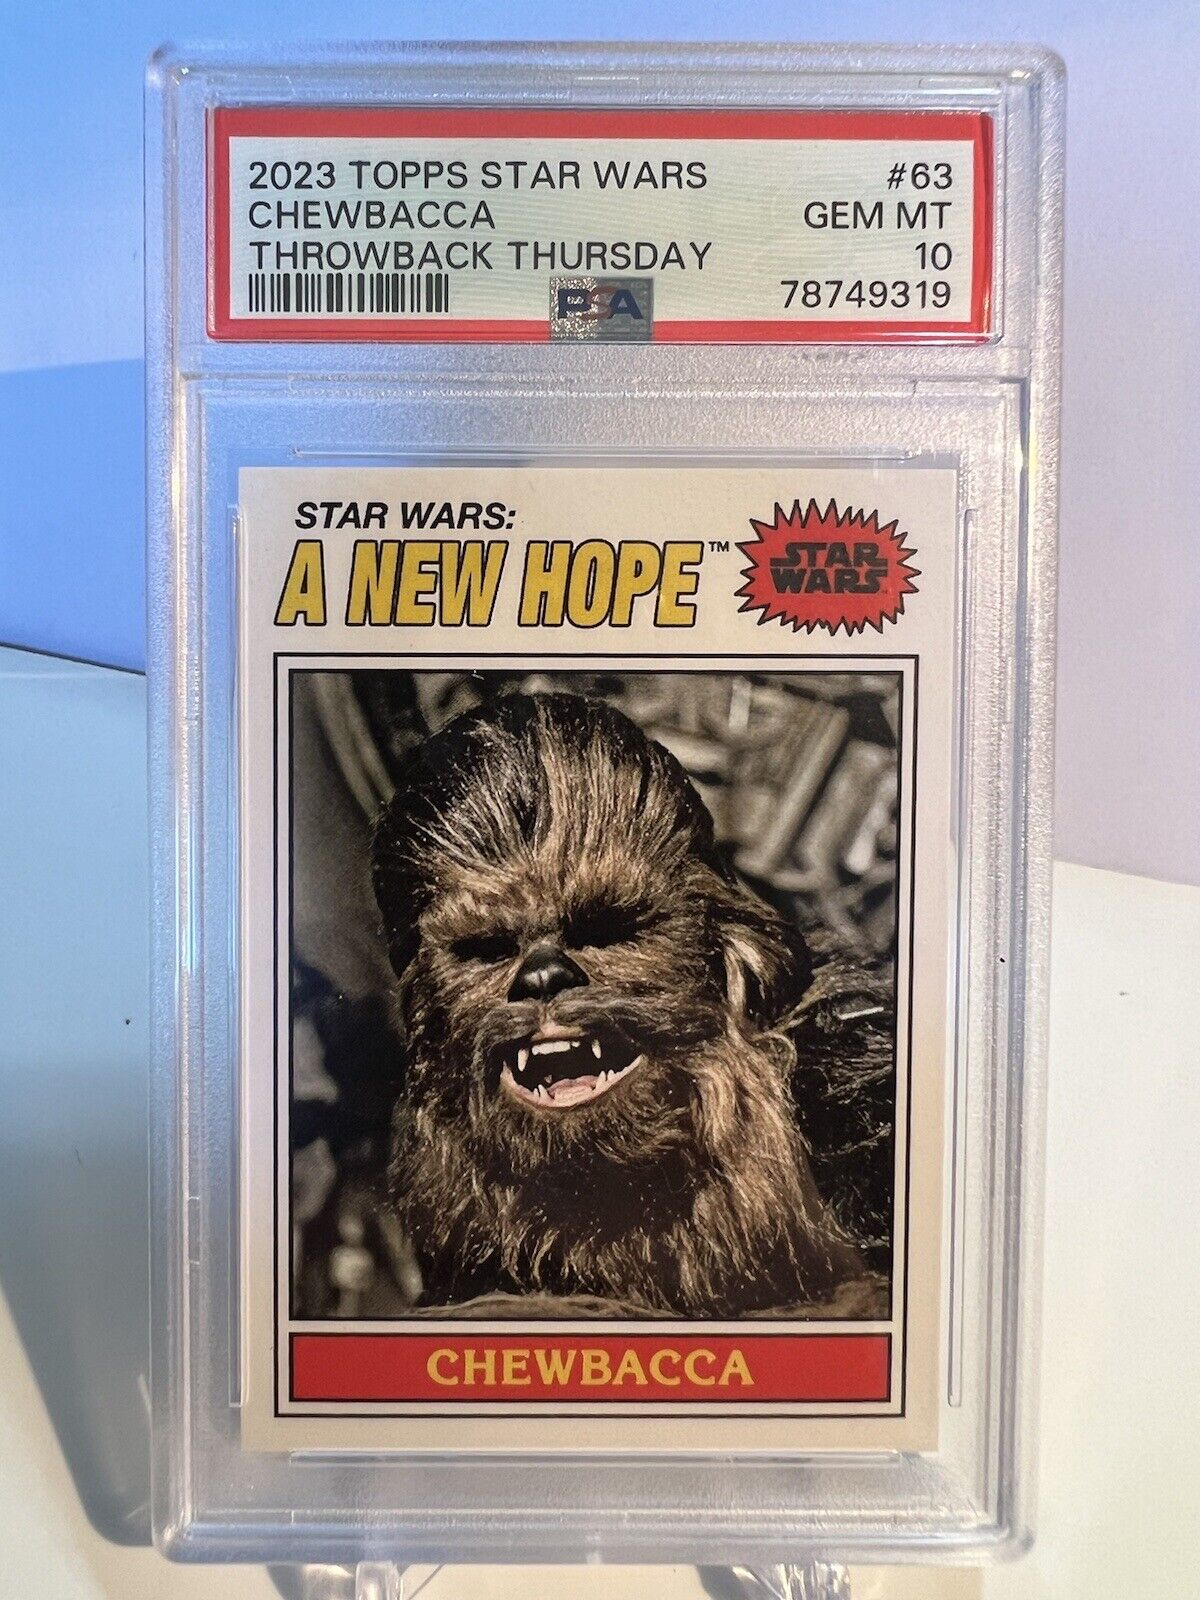 Chewbacca 2023 Topps Throwback Thursday Star Wars #63 PSA 10 GEM MT